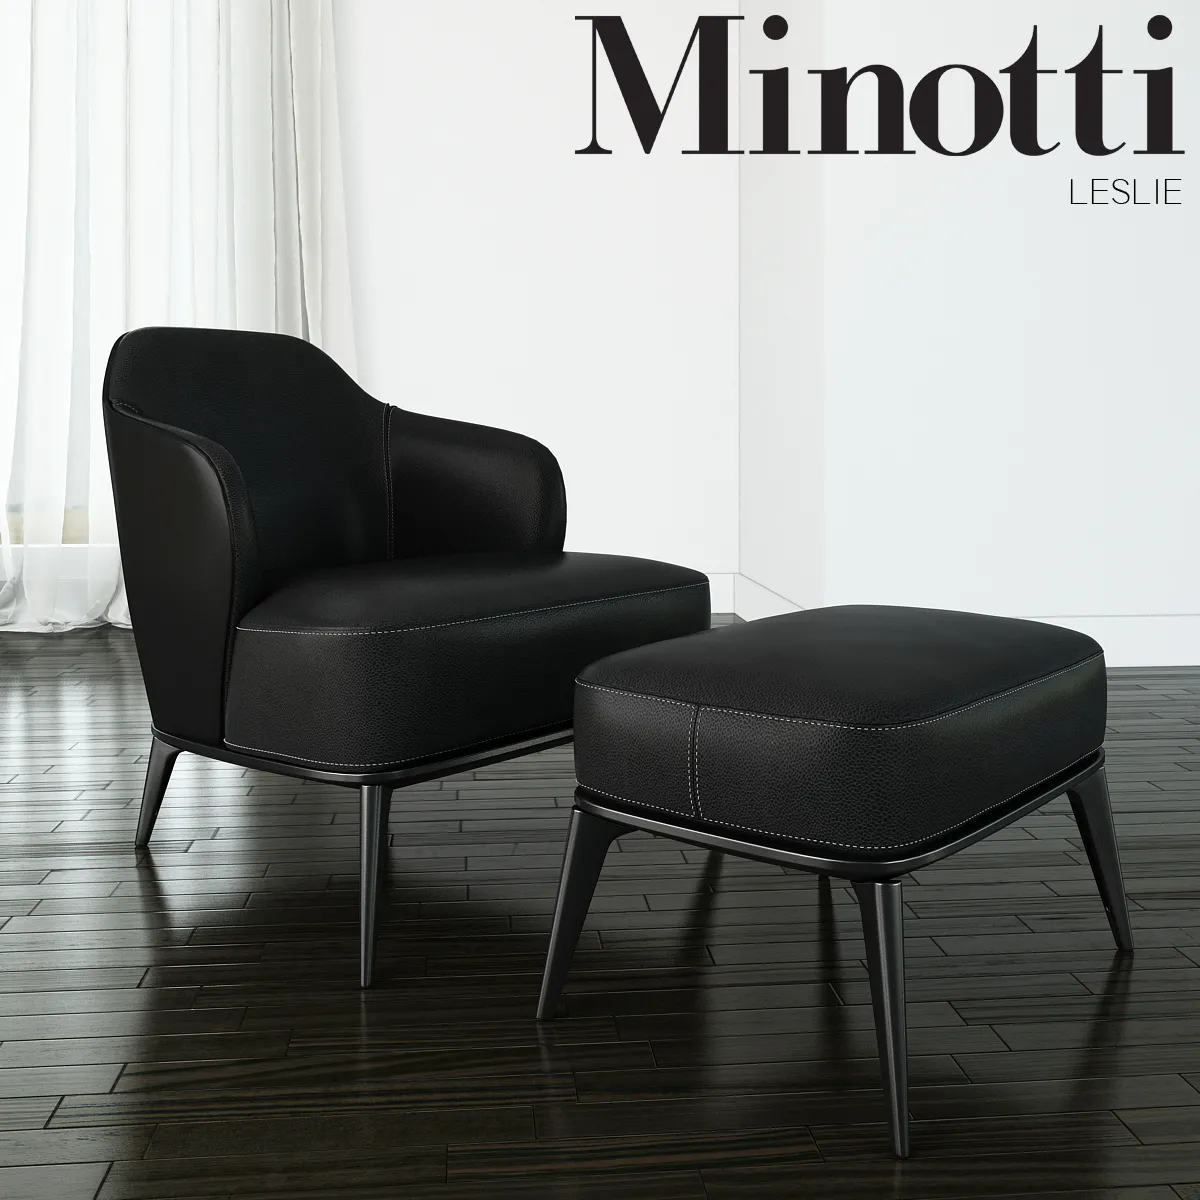 Minotti Leslie armchair with ottoman leather – 3406